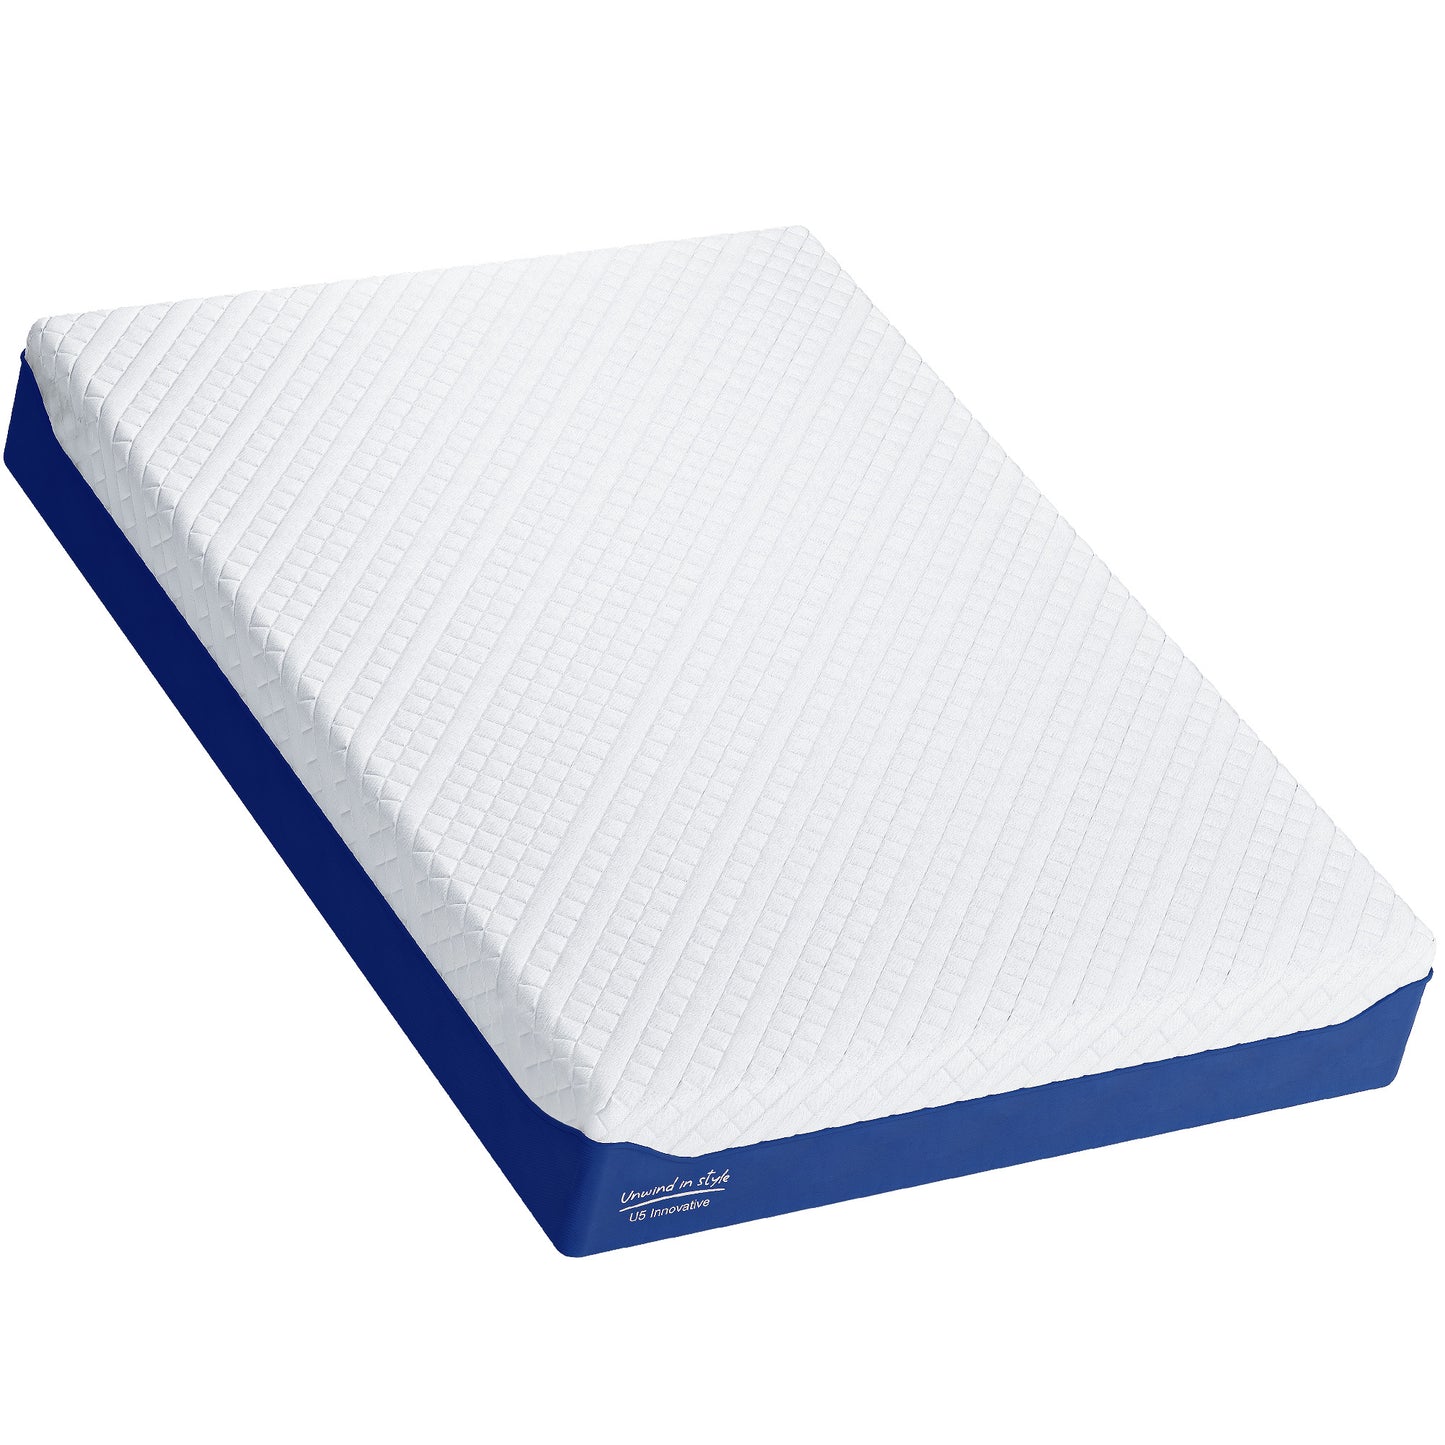 SogesPower 12inches Thickness Hybrid Mattress Gel Memory Foam- Full, White+Blue